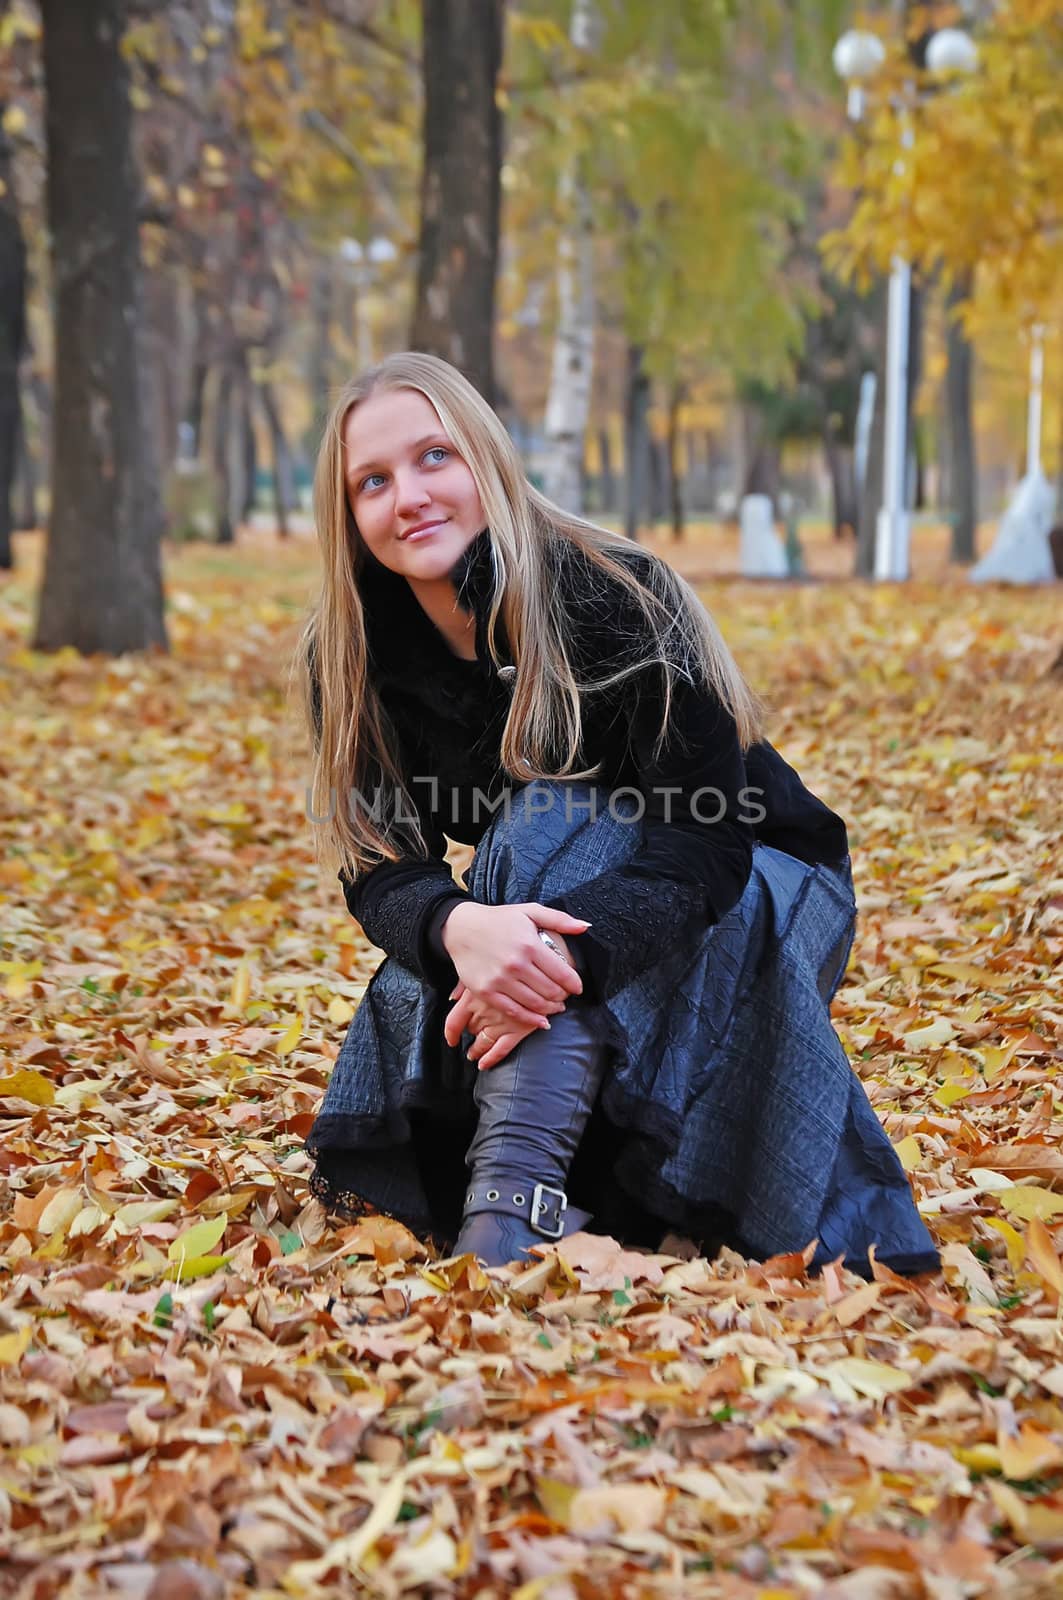  Autumn girl by Pospelova